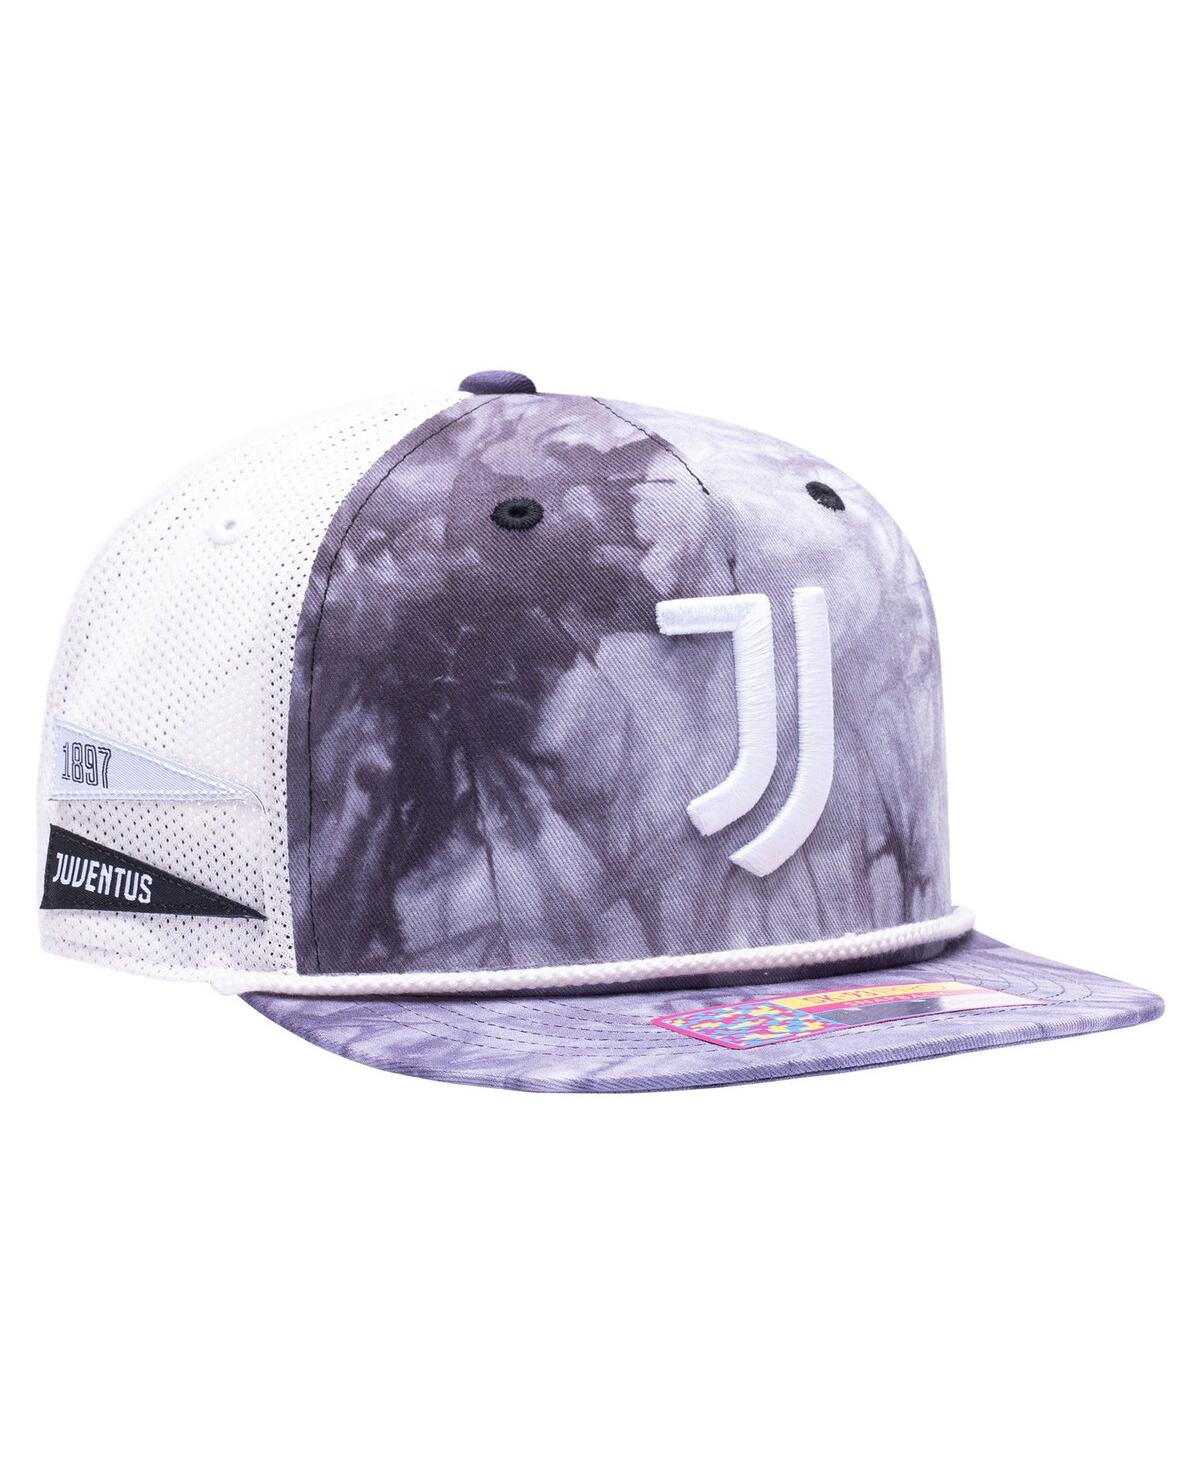 Men's Juventus Woodstock Tie-Dye Trucker Snapback Hat - Black